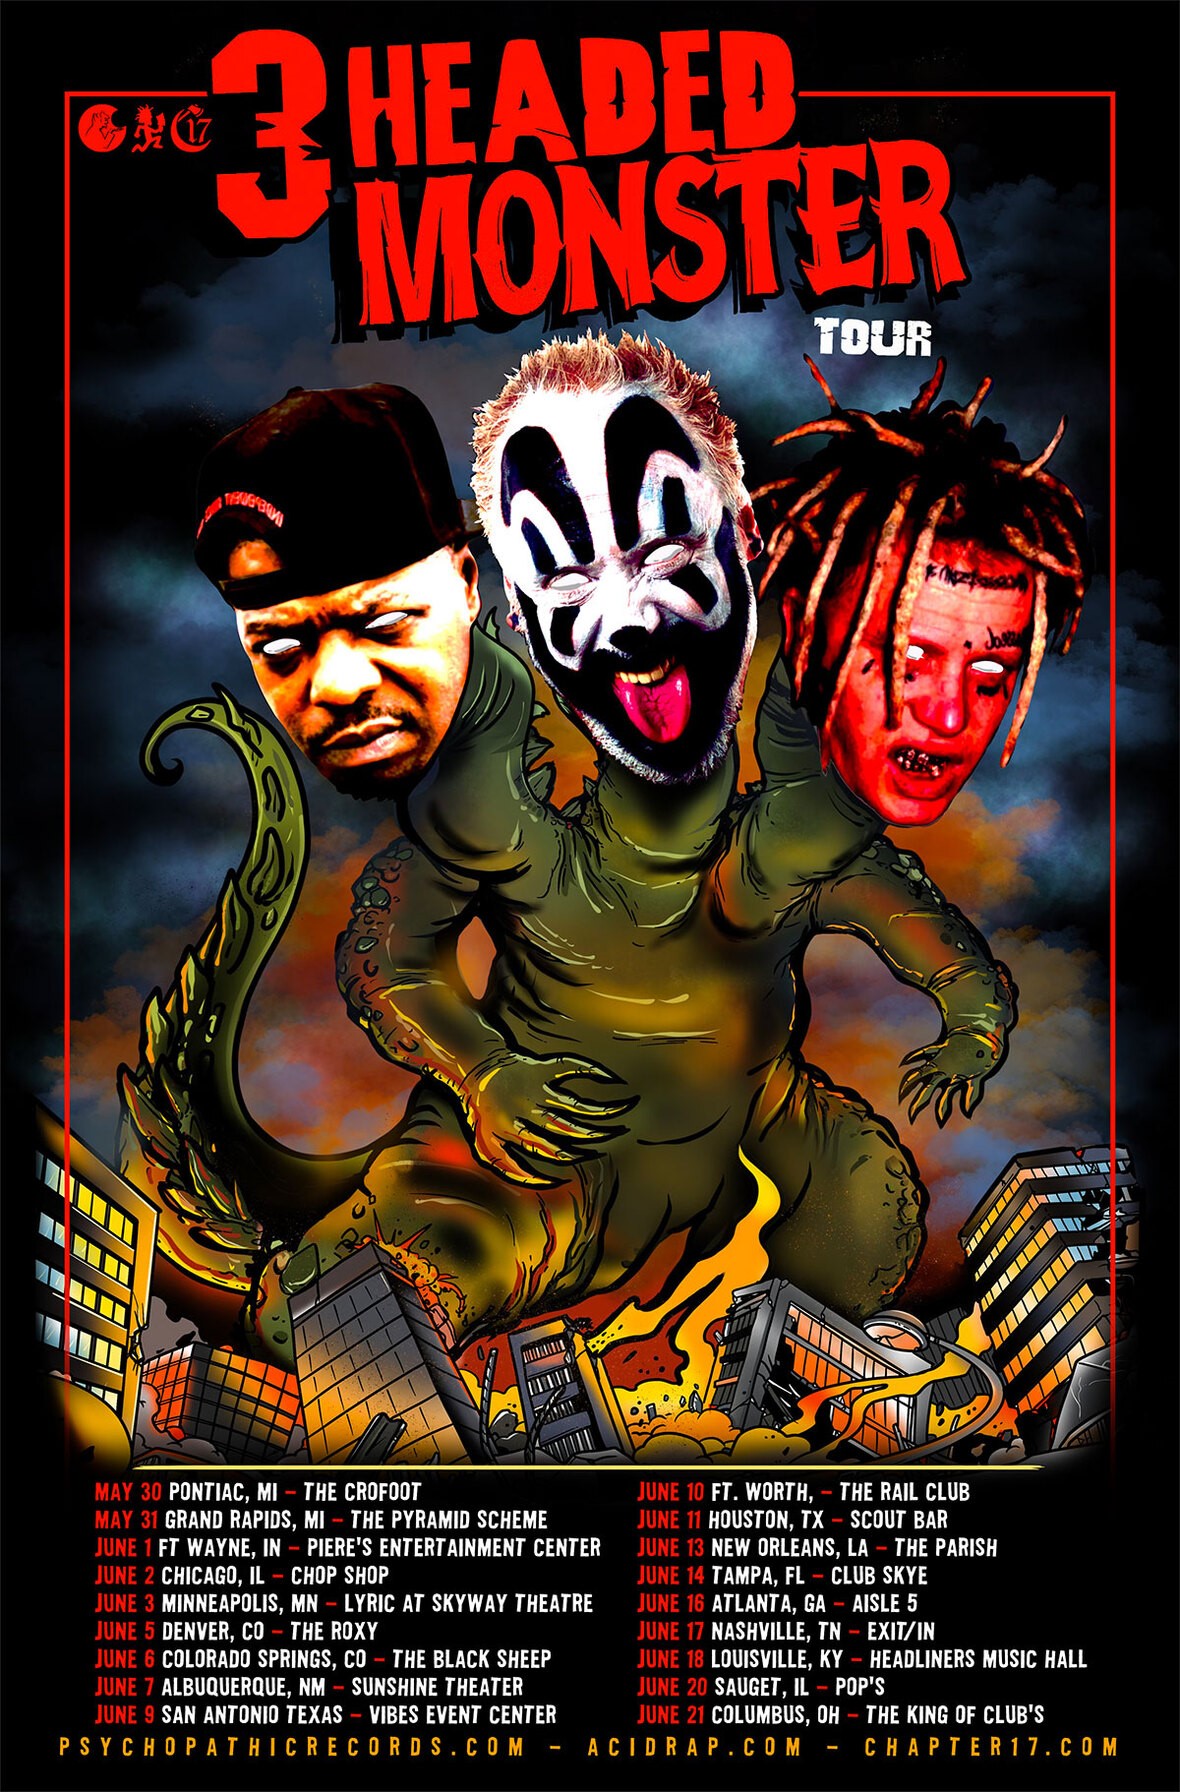 violent j three headed monster tour